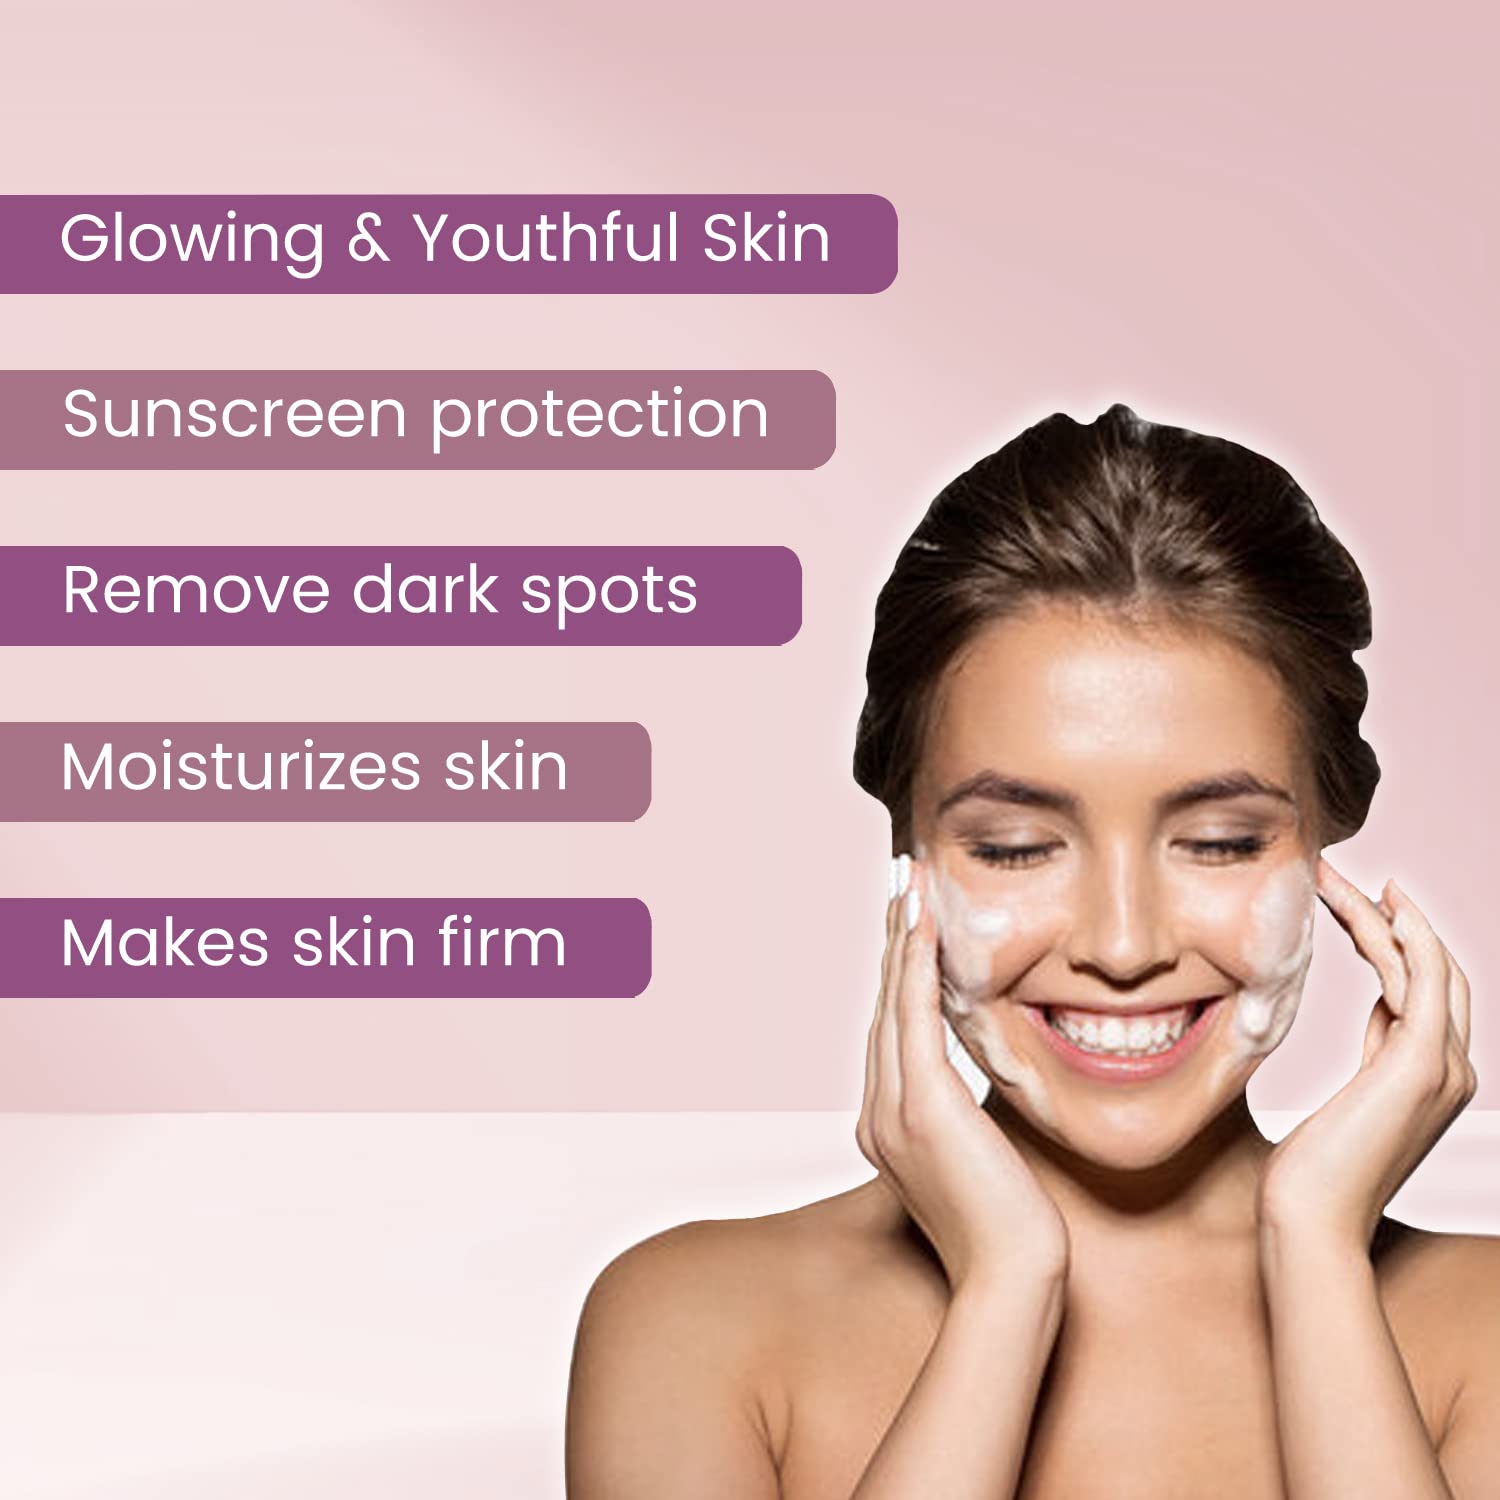 Kozicare Skin Lightening Soap, 75g (Pack of 3) Sunscreen Protection, Contains Goodness of 0.50% Kojic Acid, 0.50% Arbutin, 0.50% Vitamin C, 0.50% Vitamin E, 0.30% Glutathione